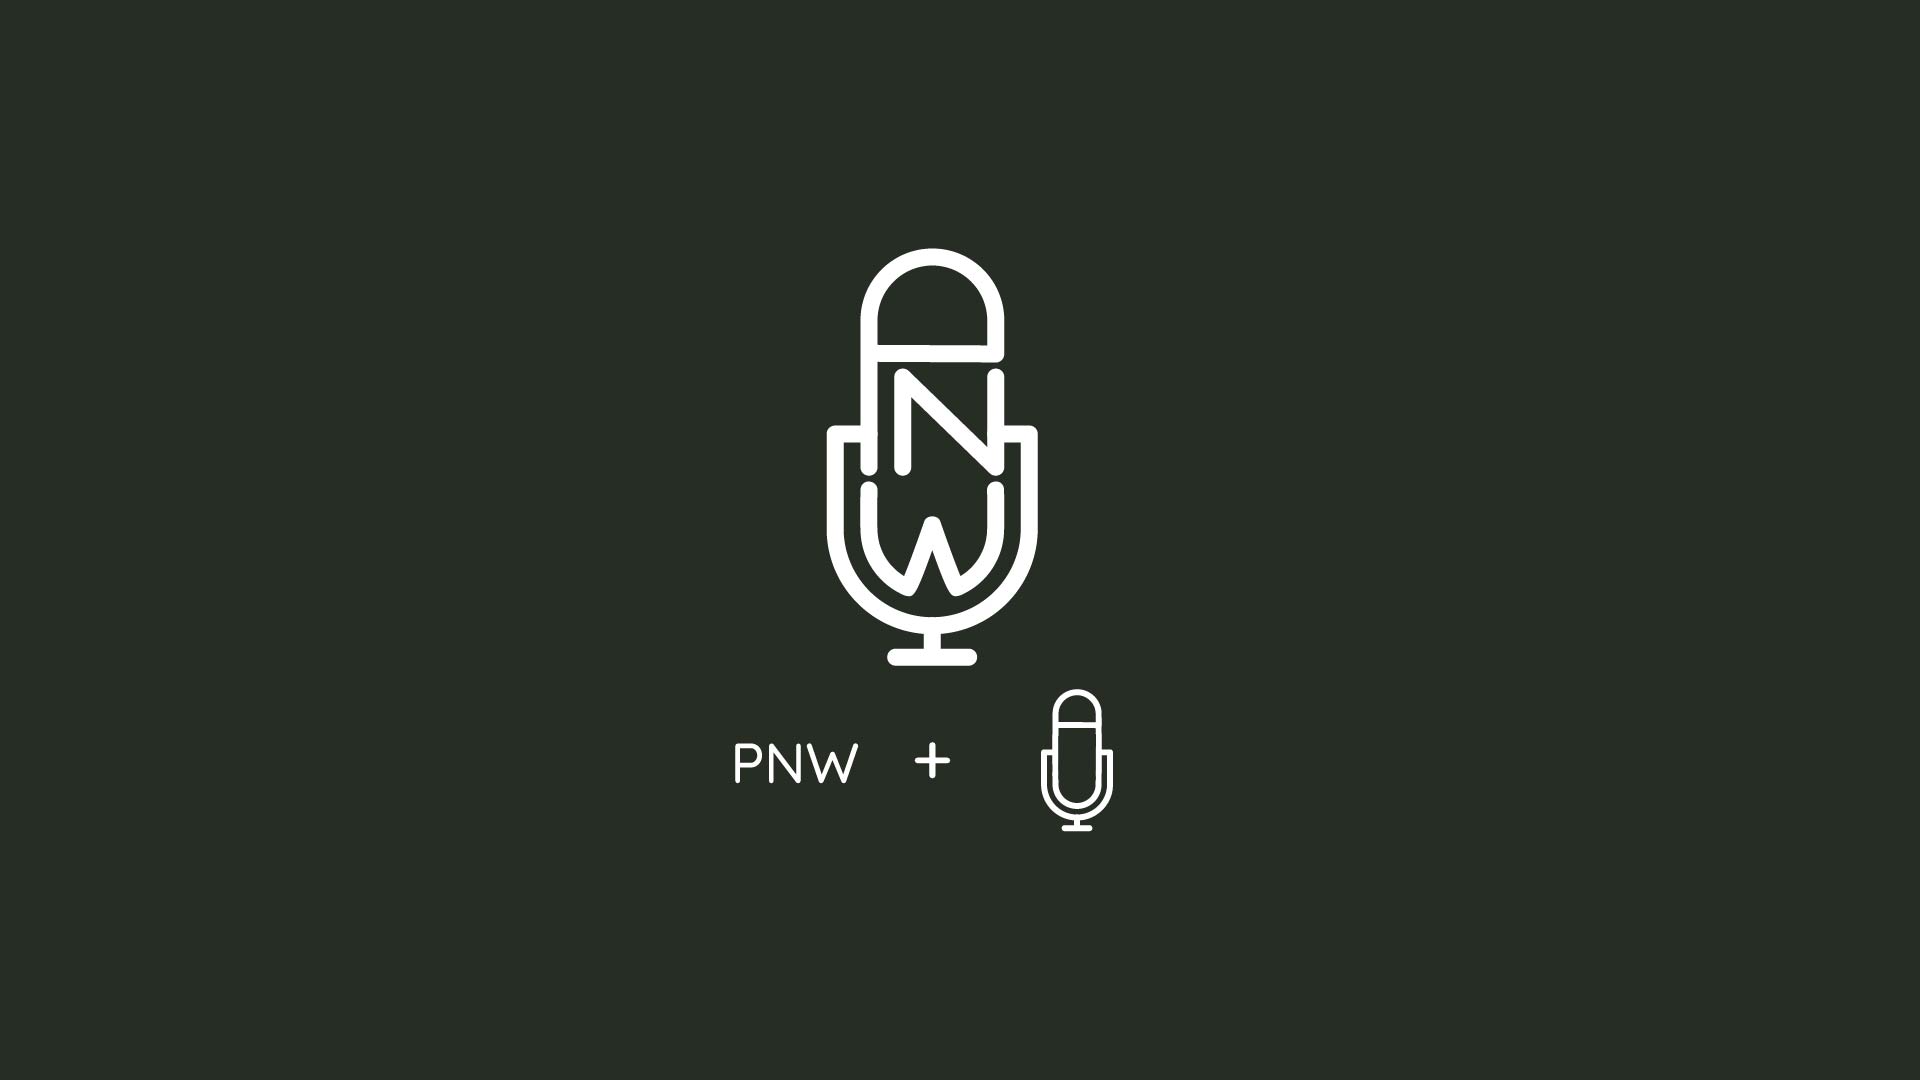 PNW Podcast Co. logo